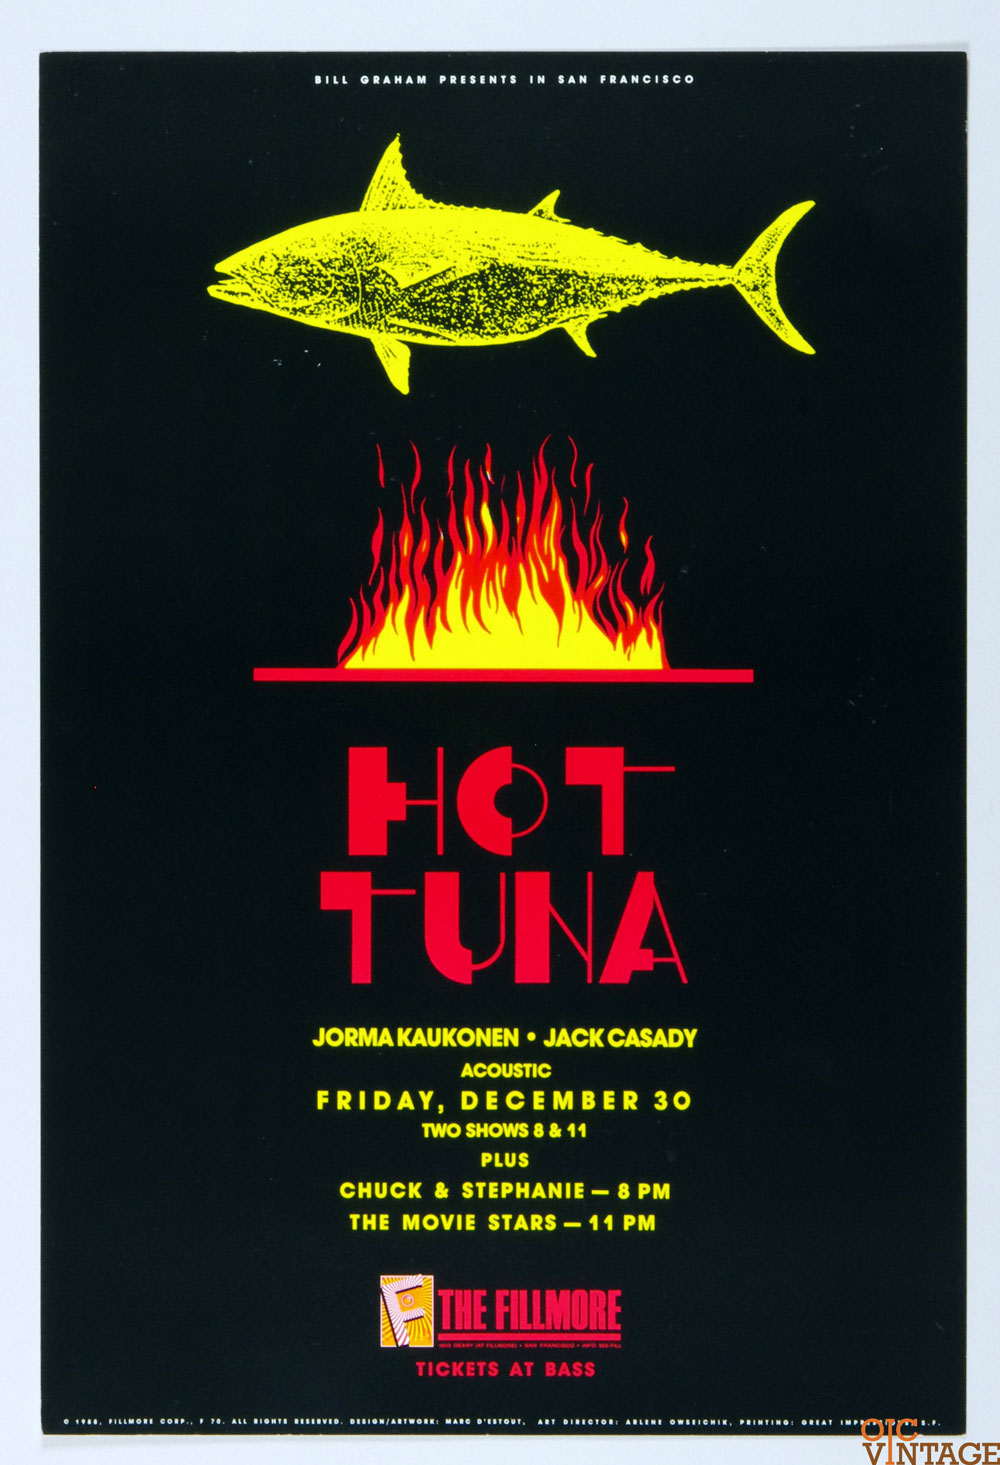 Hot Tuna Jorma Kaukonen Jack Cassidy Poster 1988 Dec 30 New Fillmore 